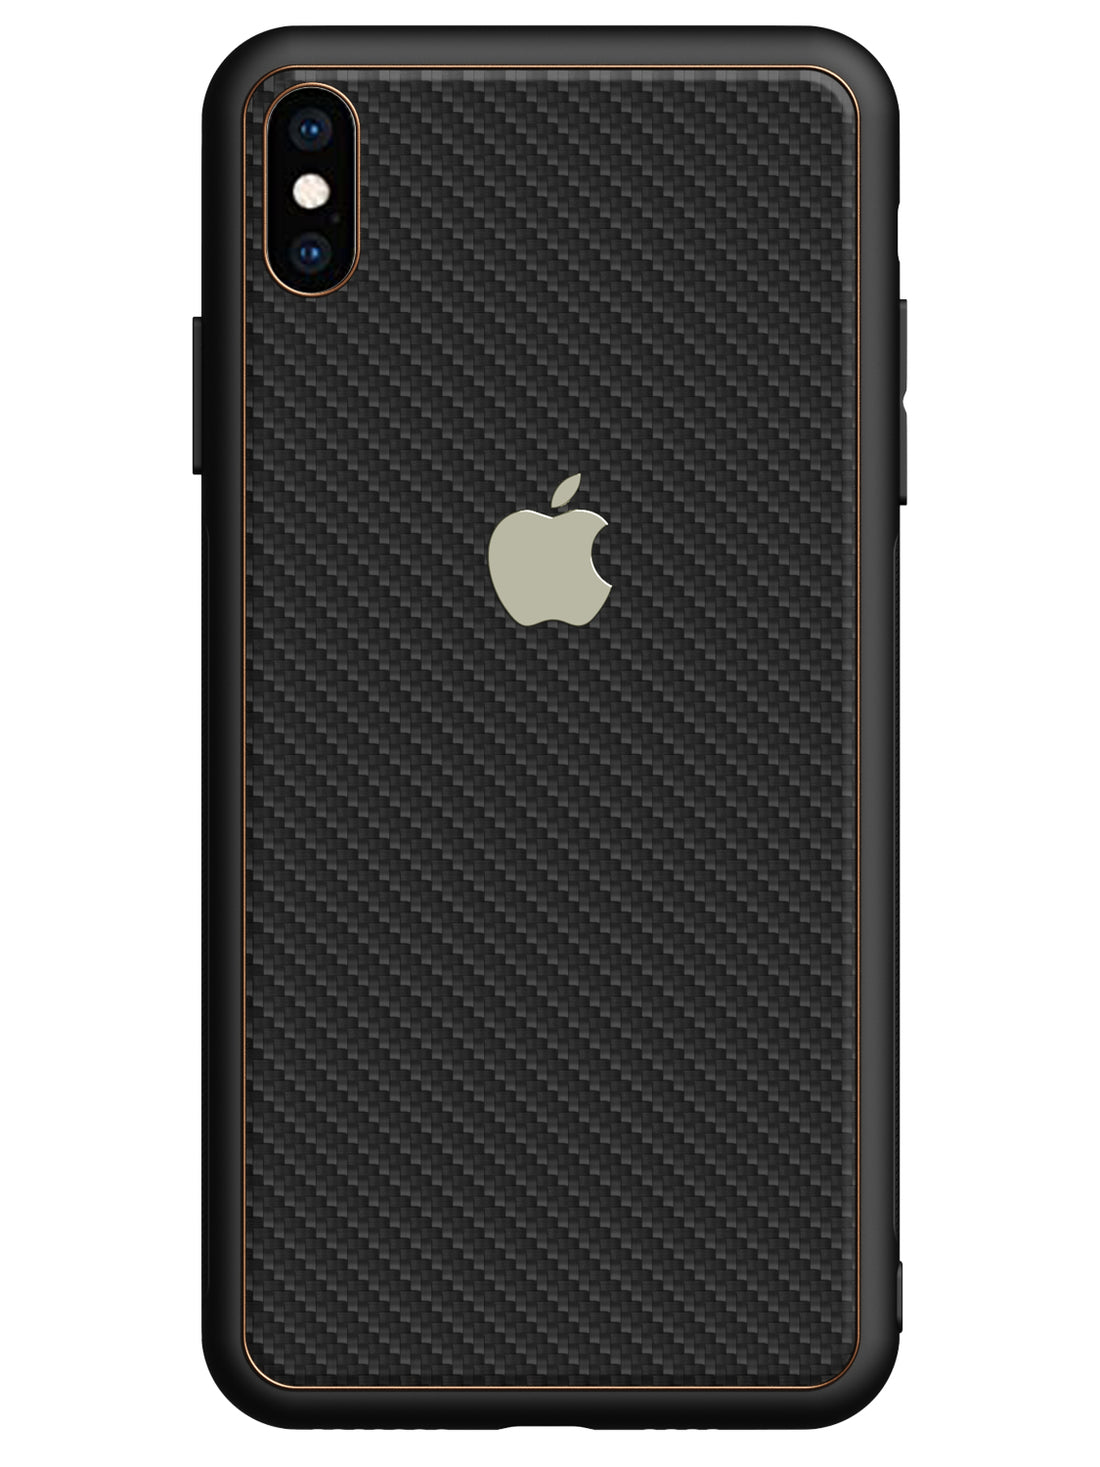 Carbon Leather Chrome Case - iPhone XS Max (Black)